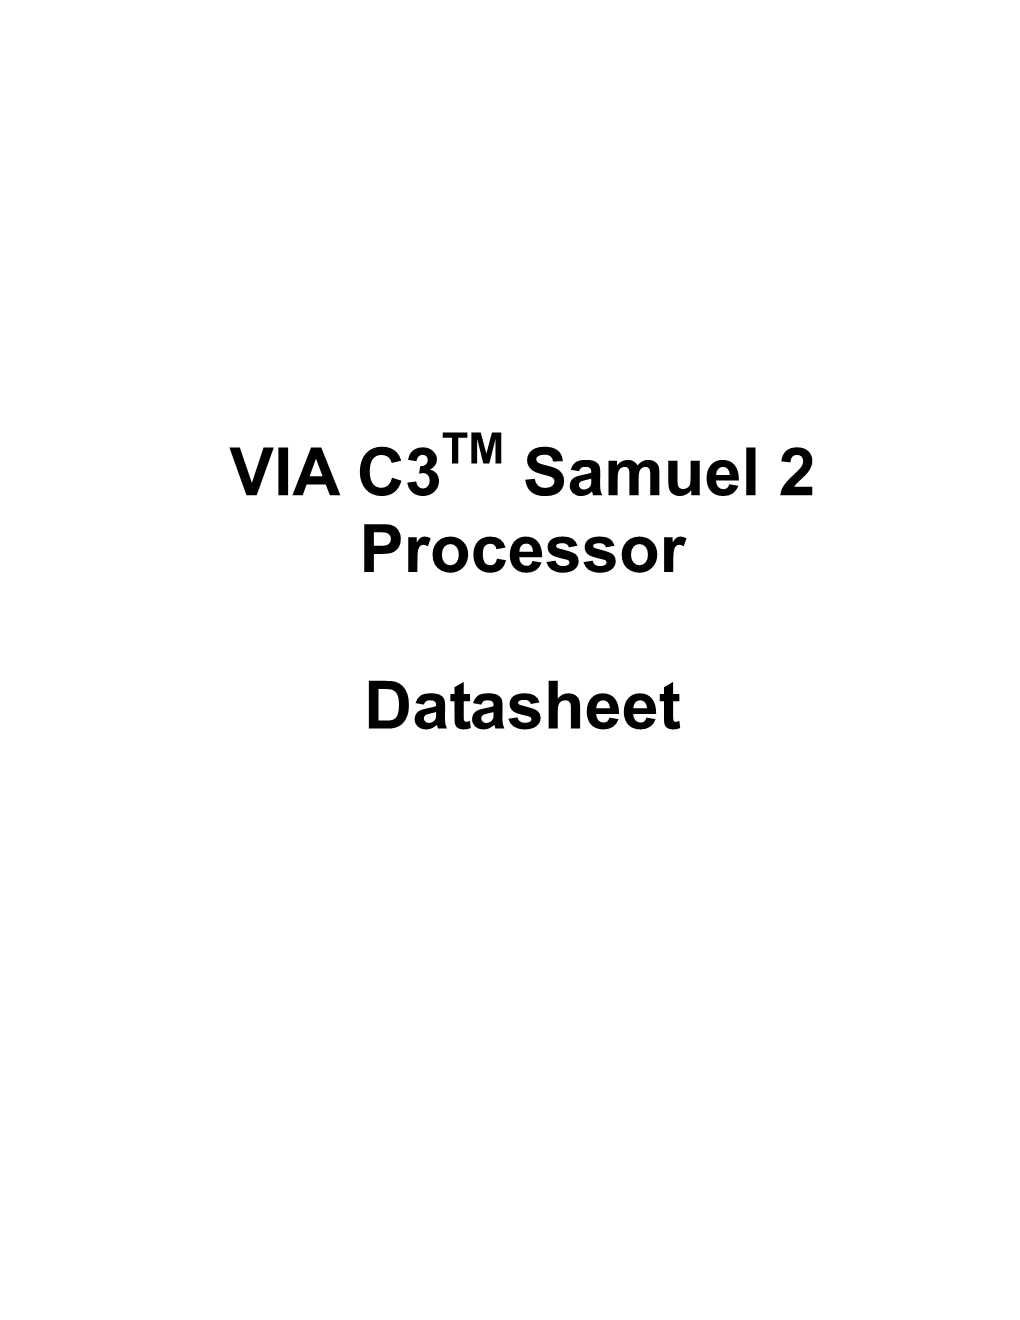 VIA C3 Samuel 2 Processor Datasheet October 2004